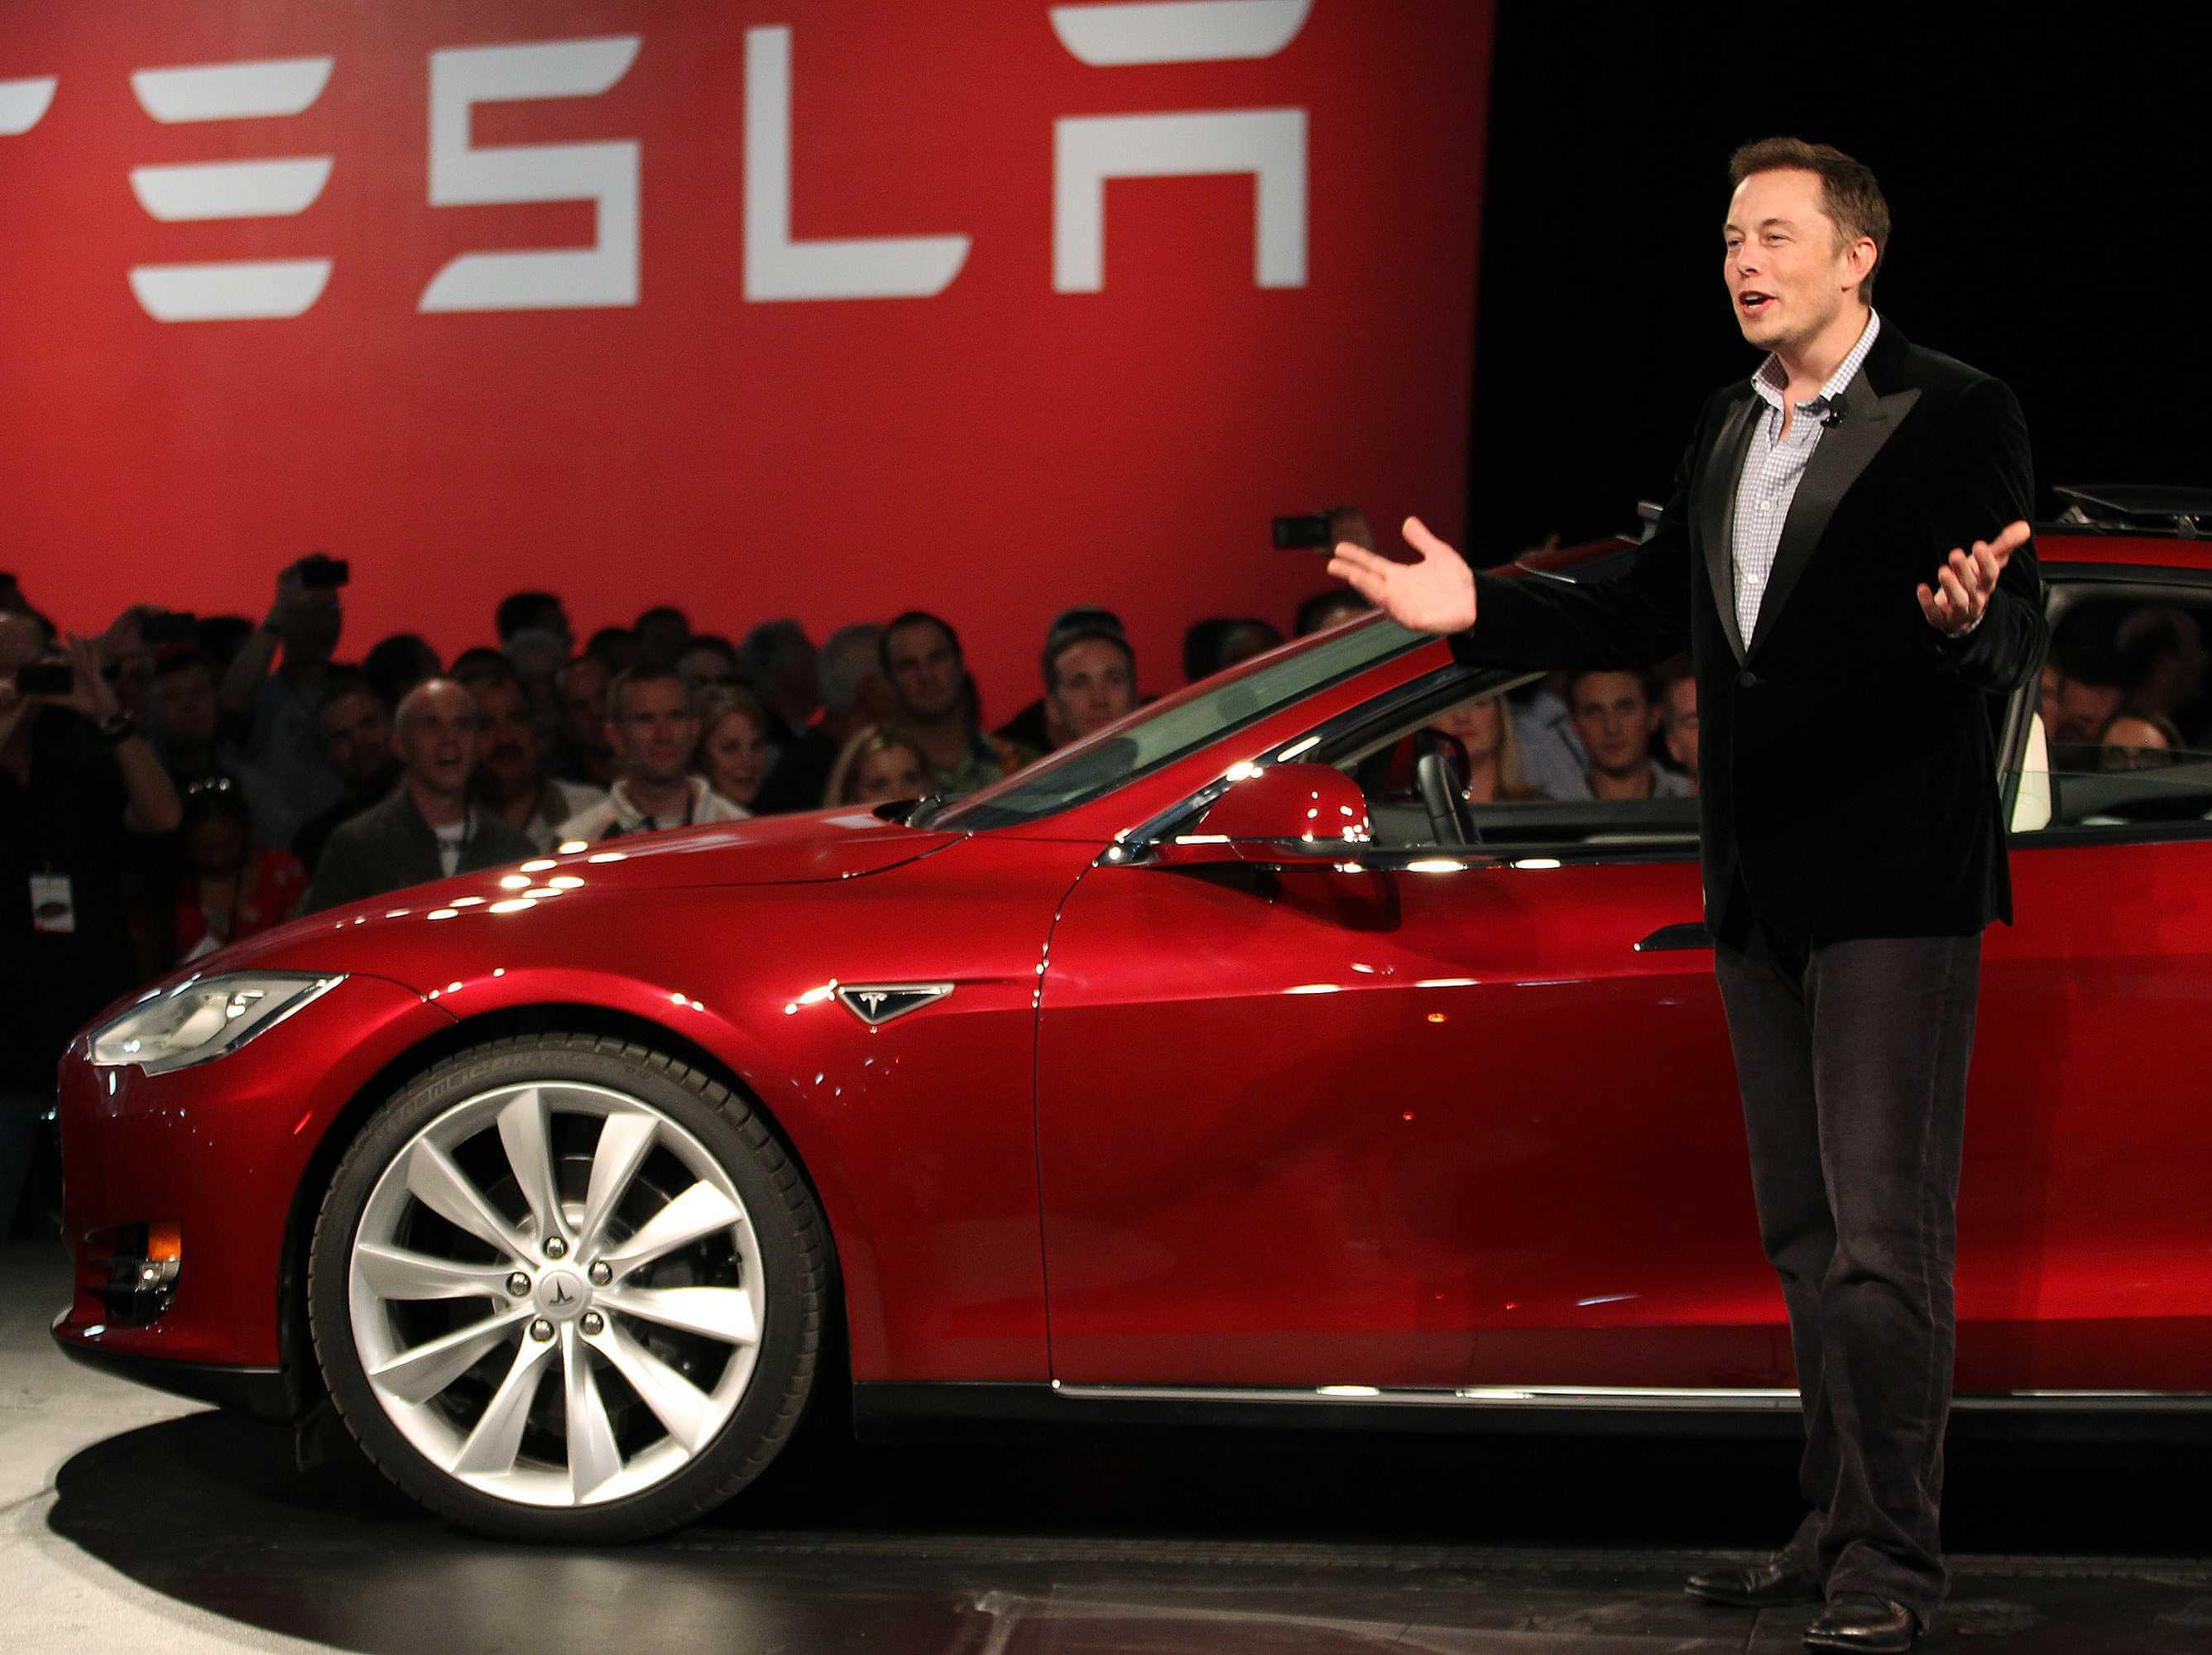 Elon Musk - Tesla Motors CEO